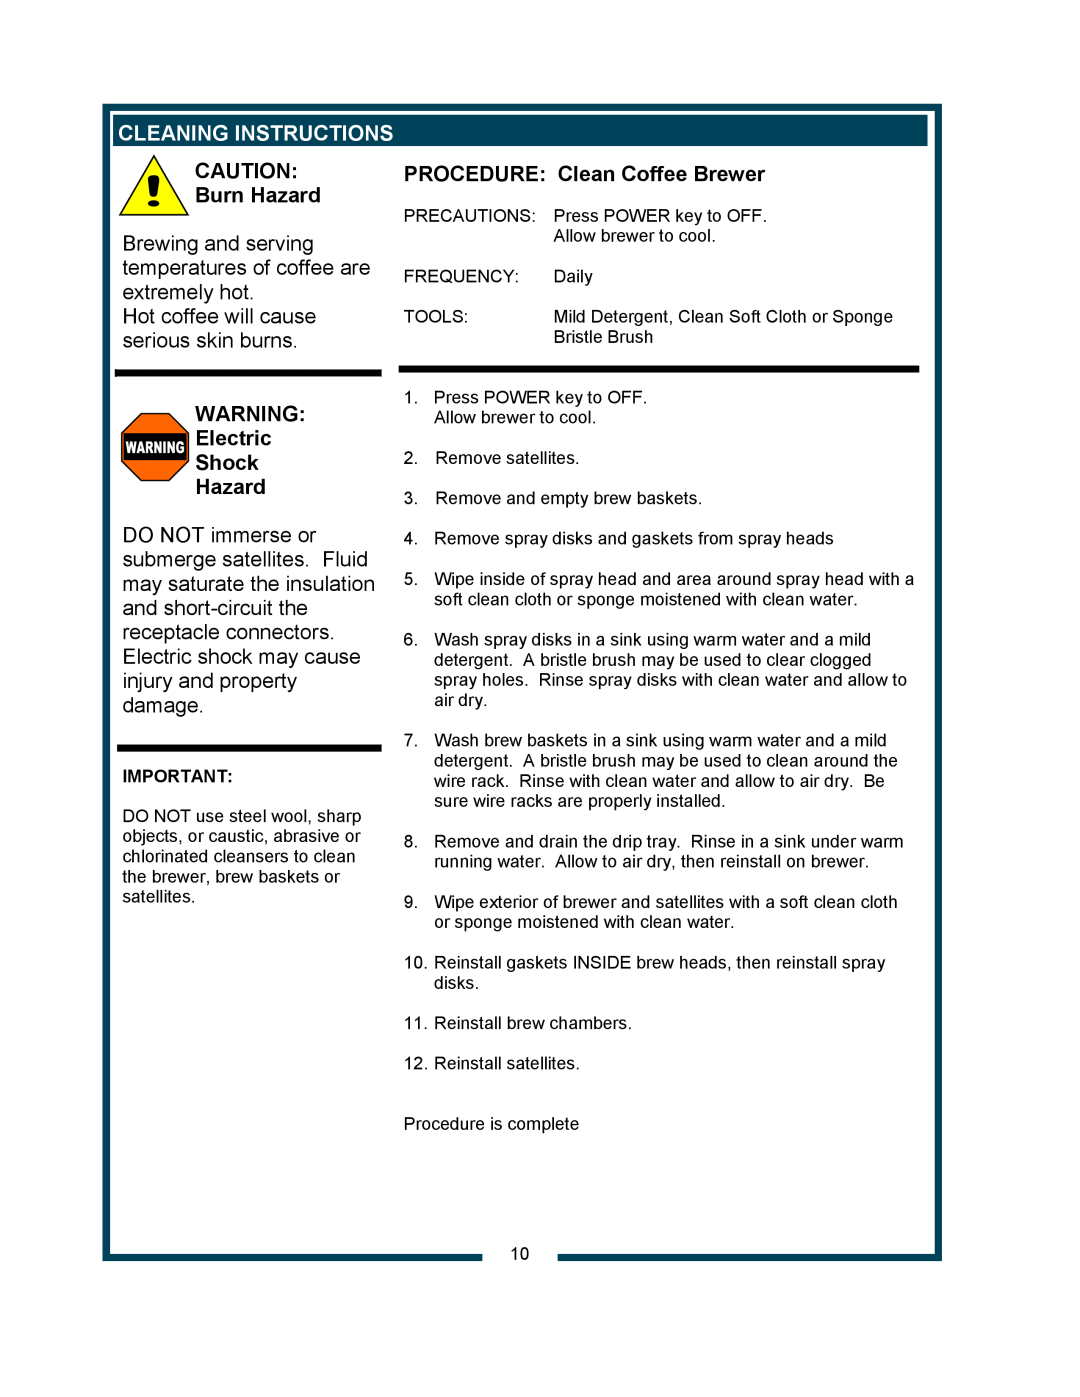 Bloomfield 9421 (SS2-HE) Electric Shock Hazard, PROCEDURE Clean Coffee Brewer, Burn Hazard, Cleaninginstructions 